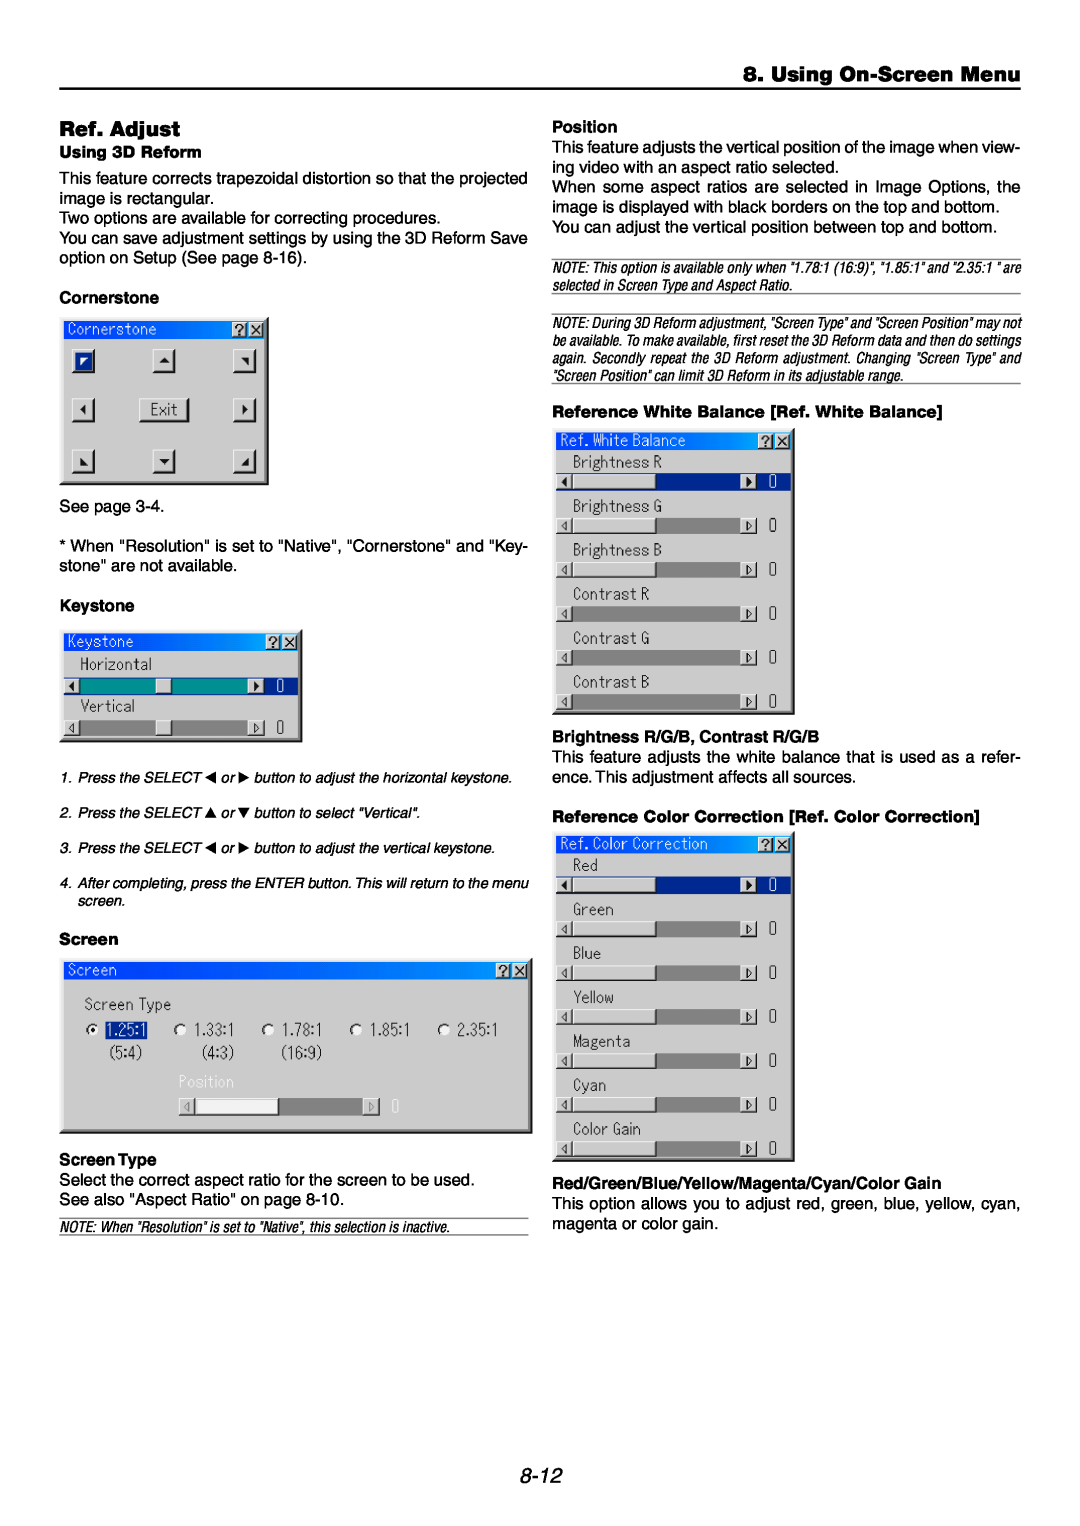 NEC GT6000 Using On-ScreenMenu, Ref. Adjust, 8-12, Using 3D Reform, Cornerstone, Keystone, Position, Screen Type 